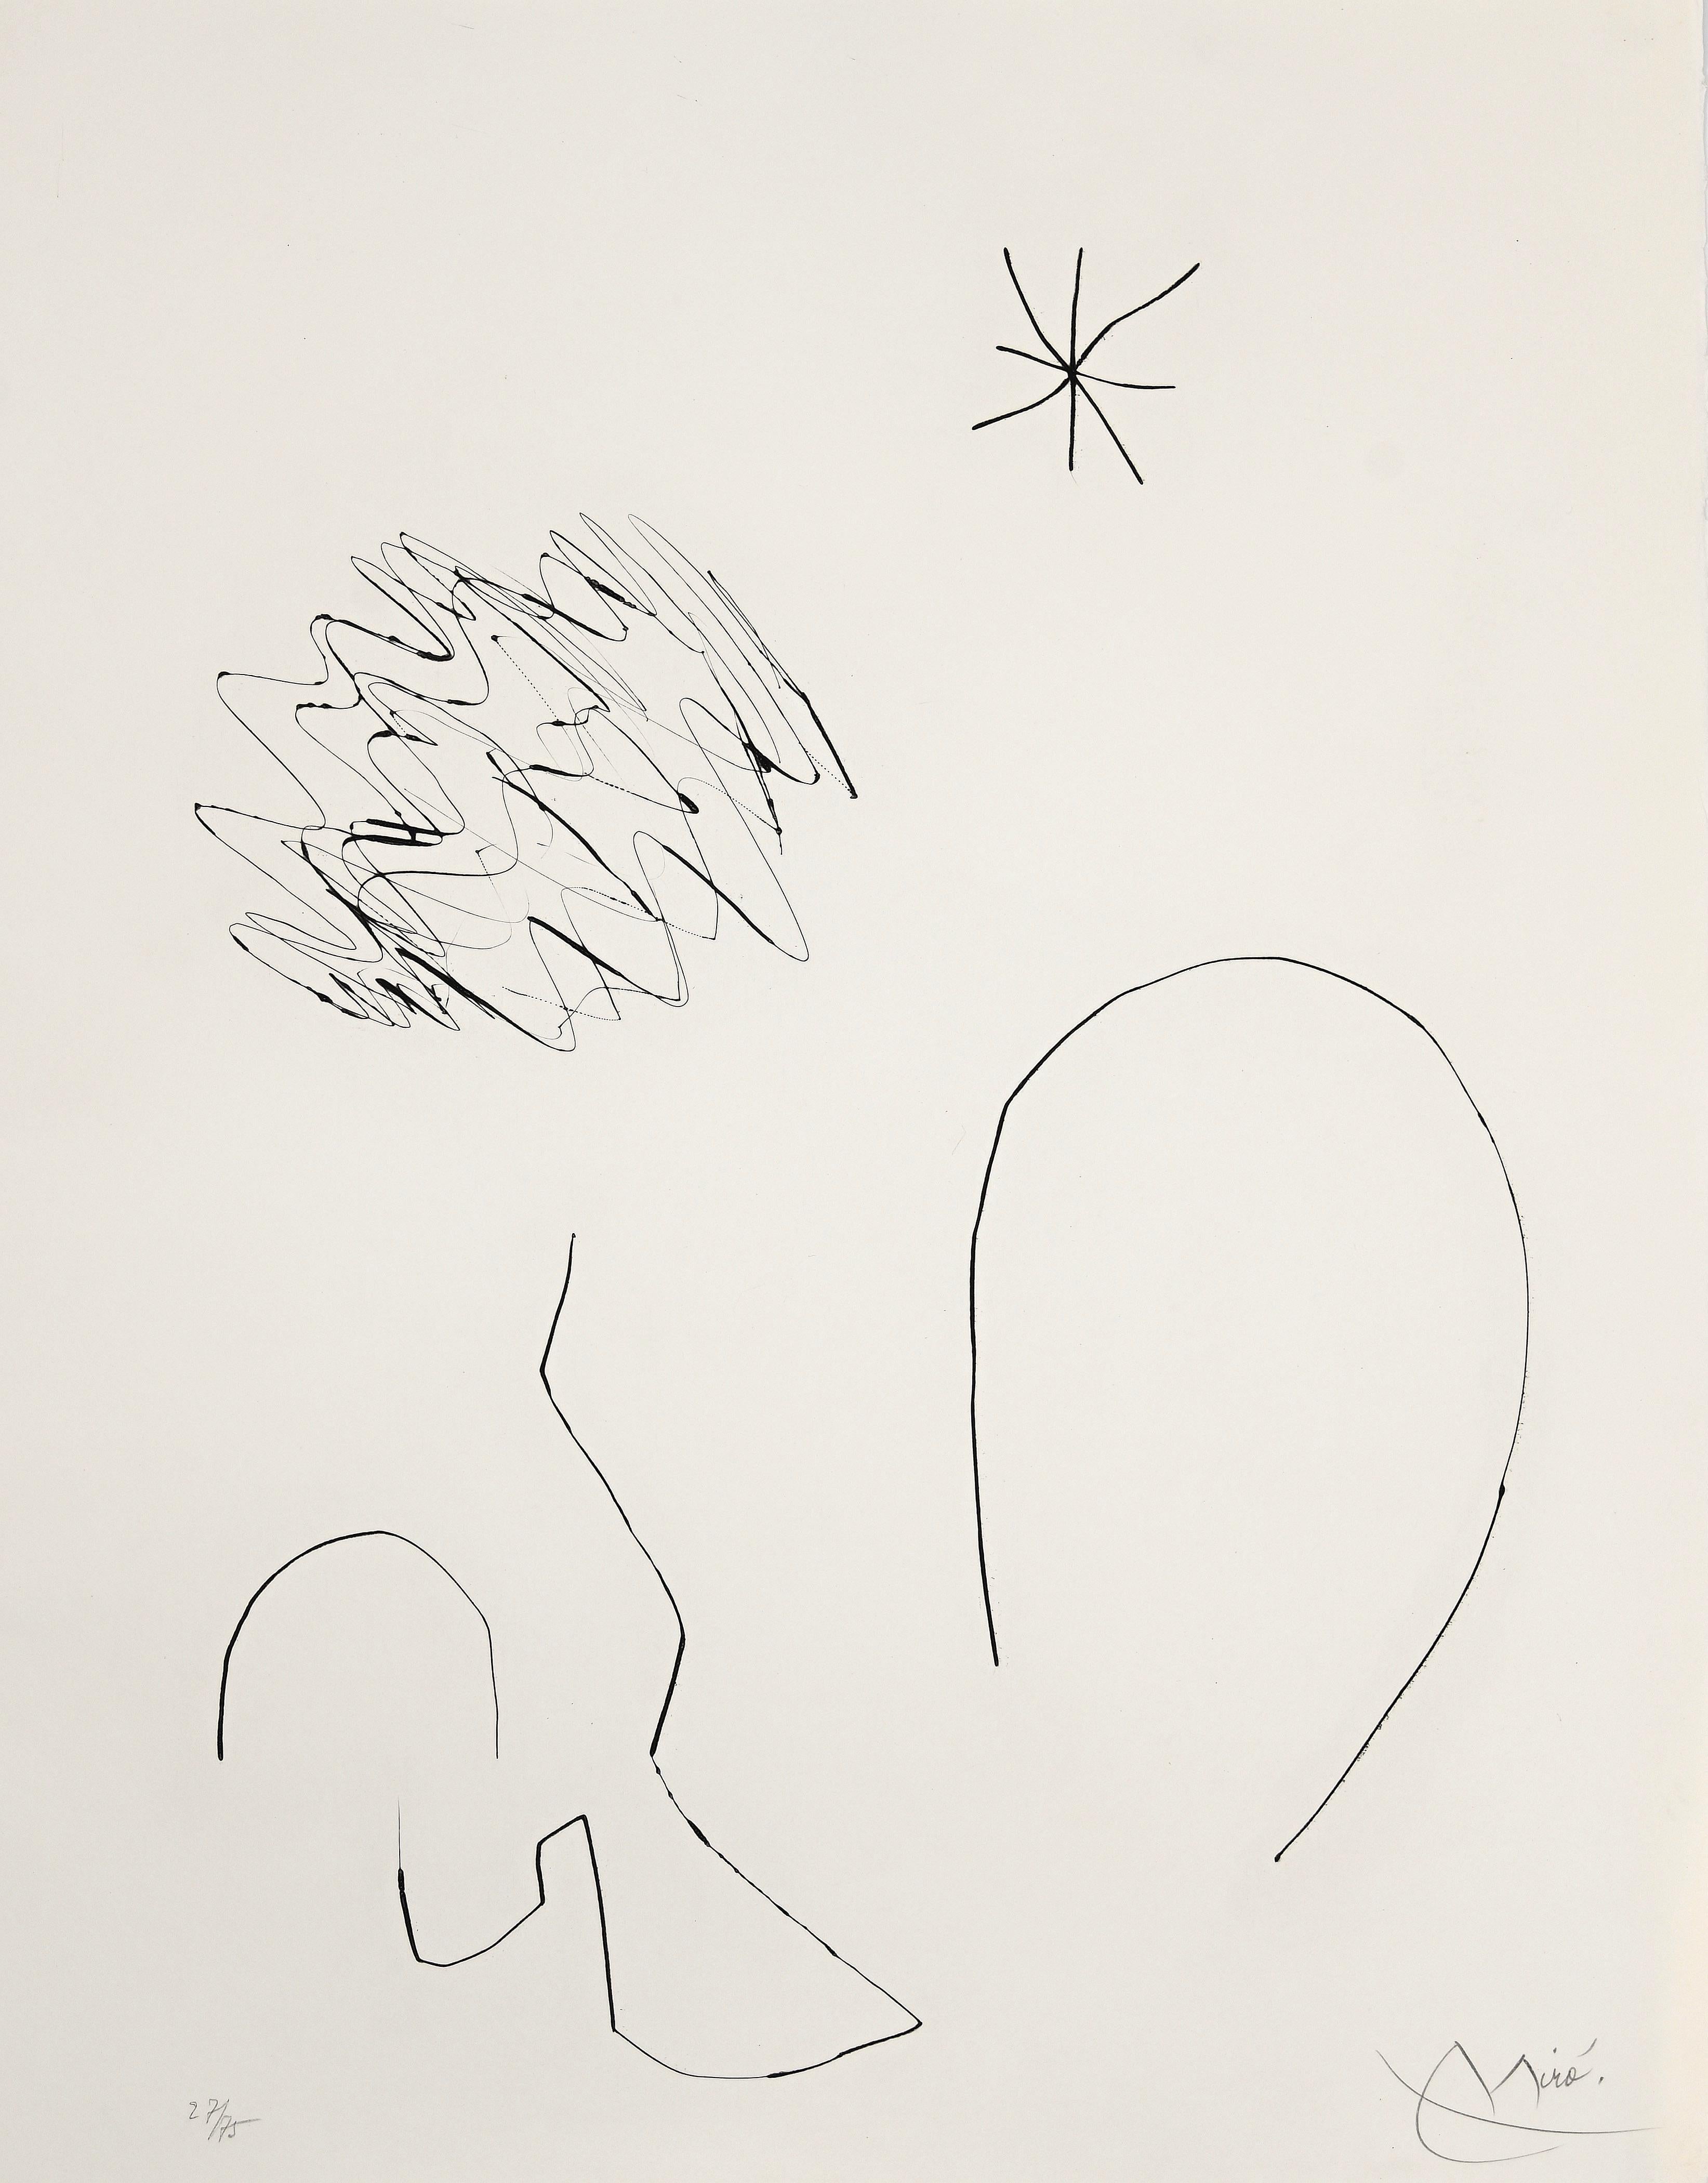 Joan Miró Abstract Print - Journal D'Un Graveur - Vol. 1 Plate 13 - Drypoint by Joan Mirò - 1975